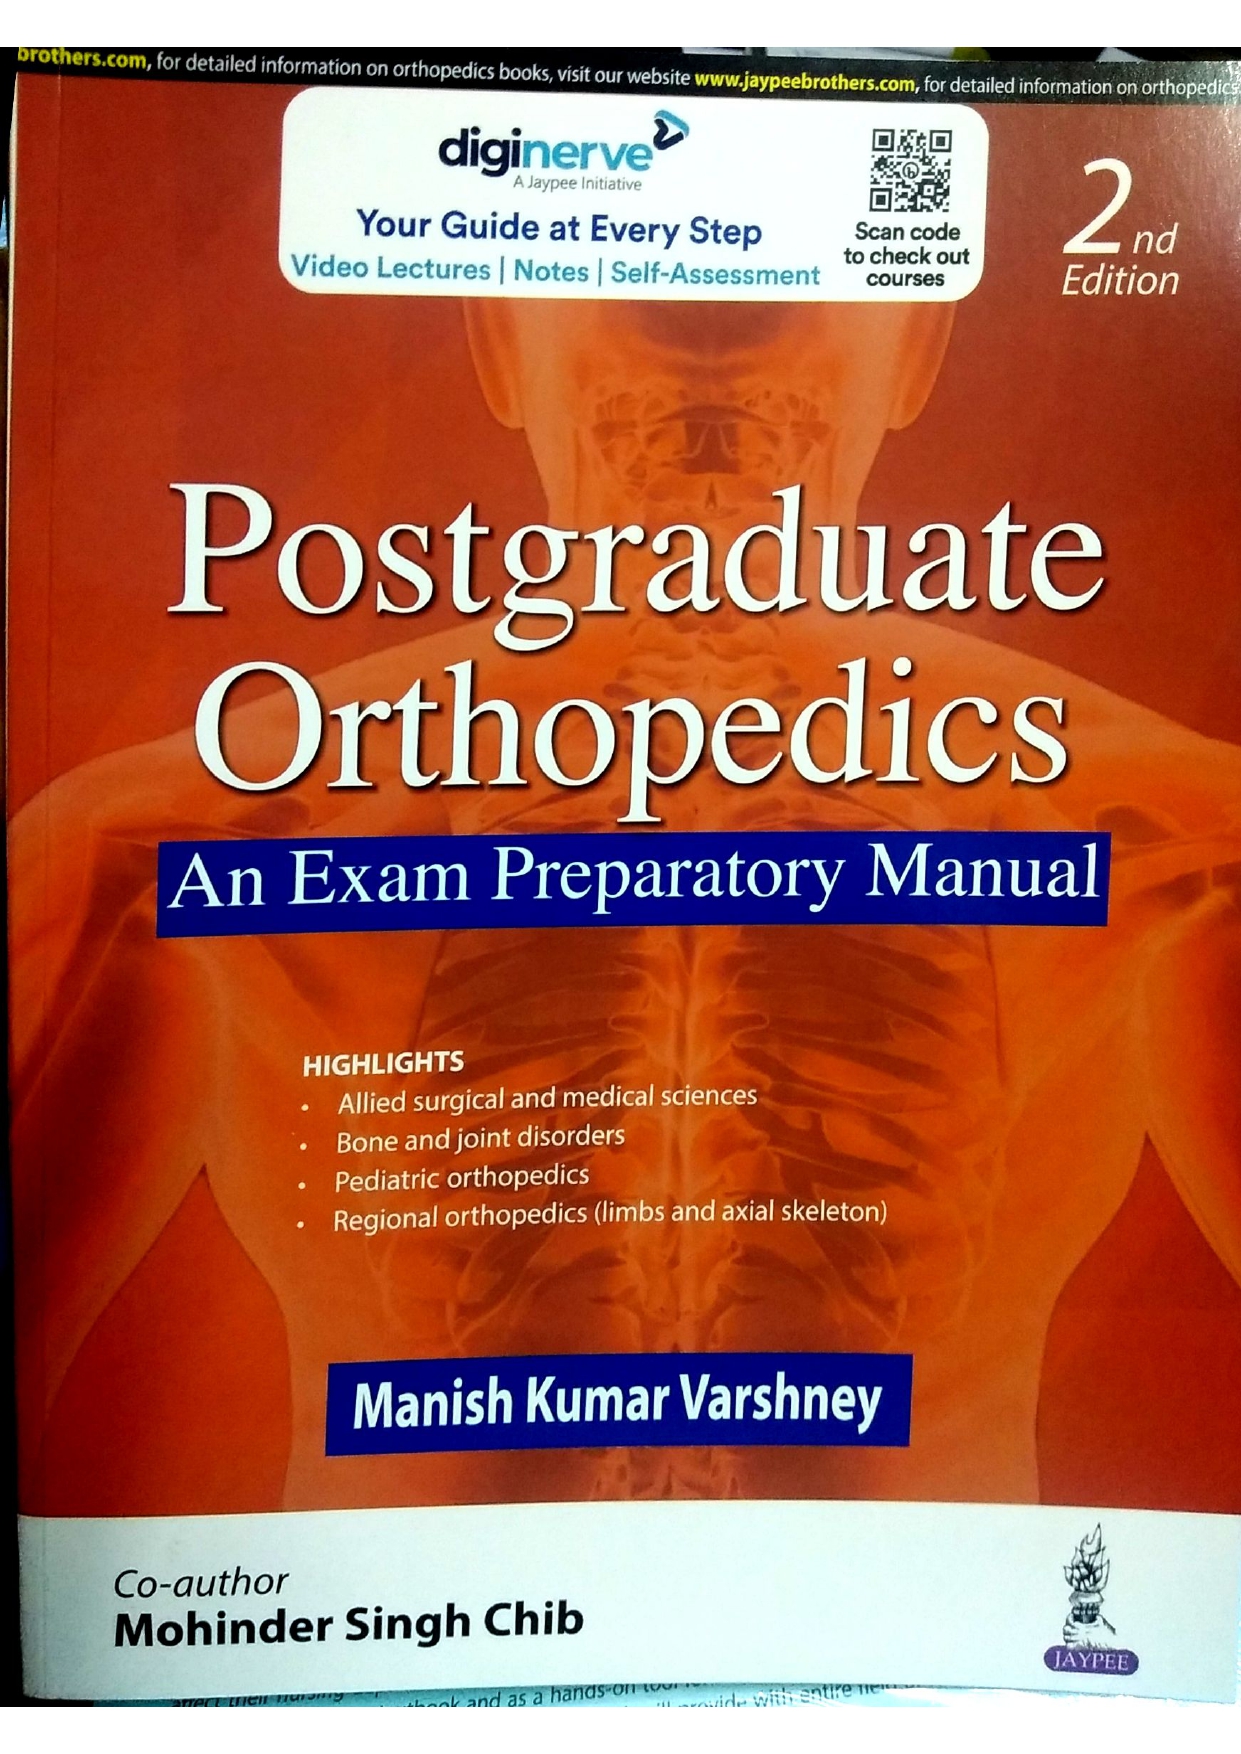 Postgraduate Orthopedics: An Exam Preparatory Manual;2Nd Edition 2022 By Manish Kumar Varshney